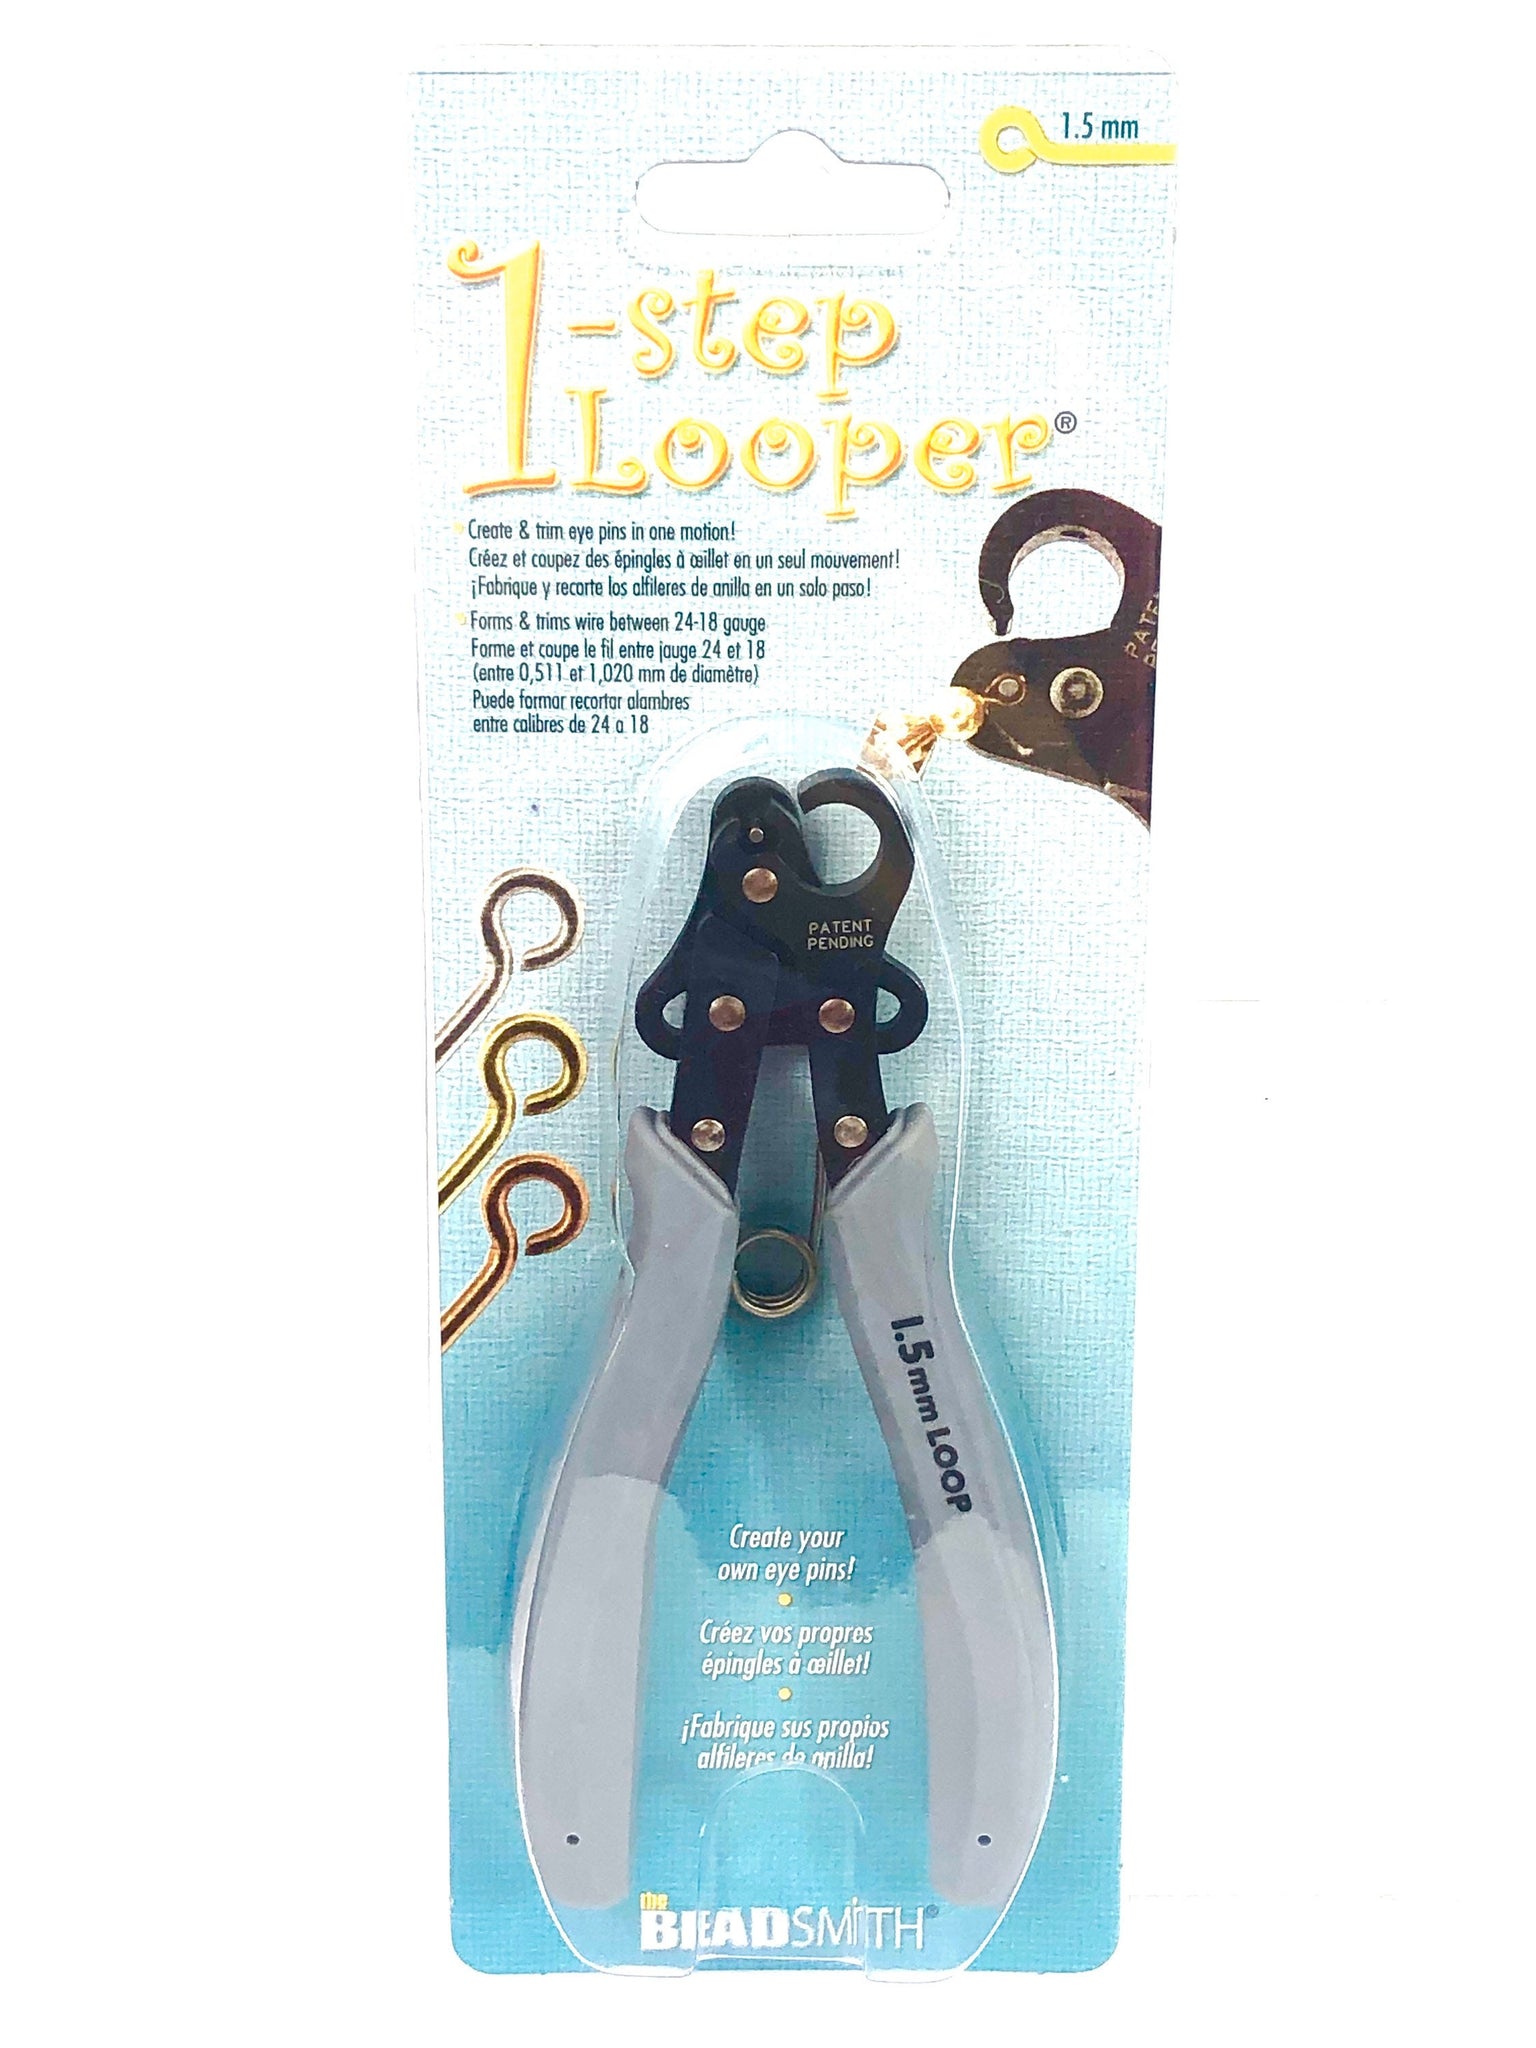 1 Step Looper Tool 2.25mm